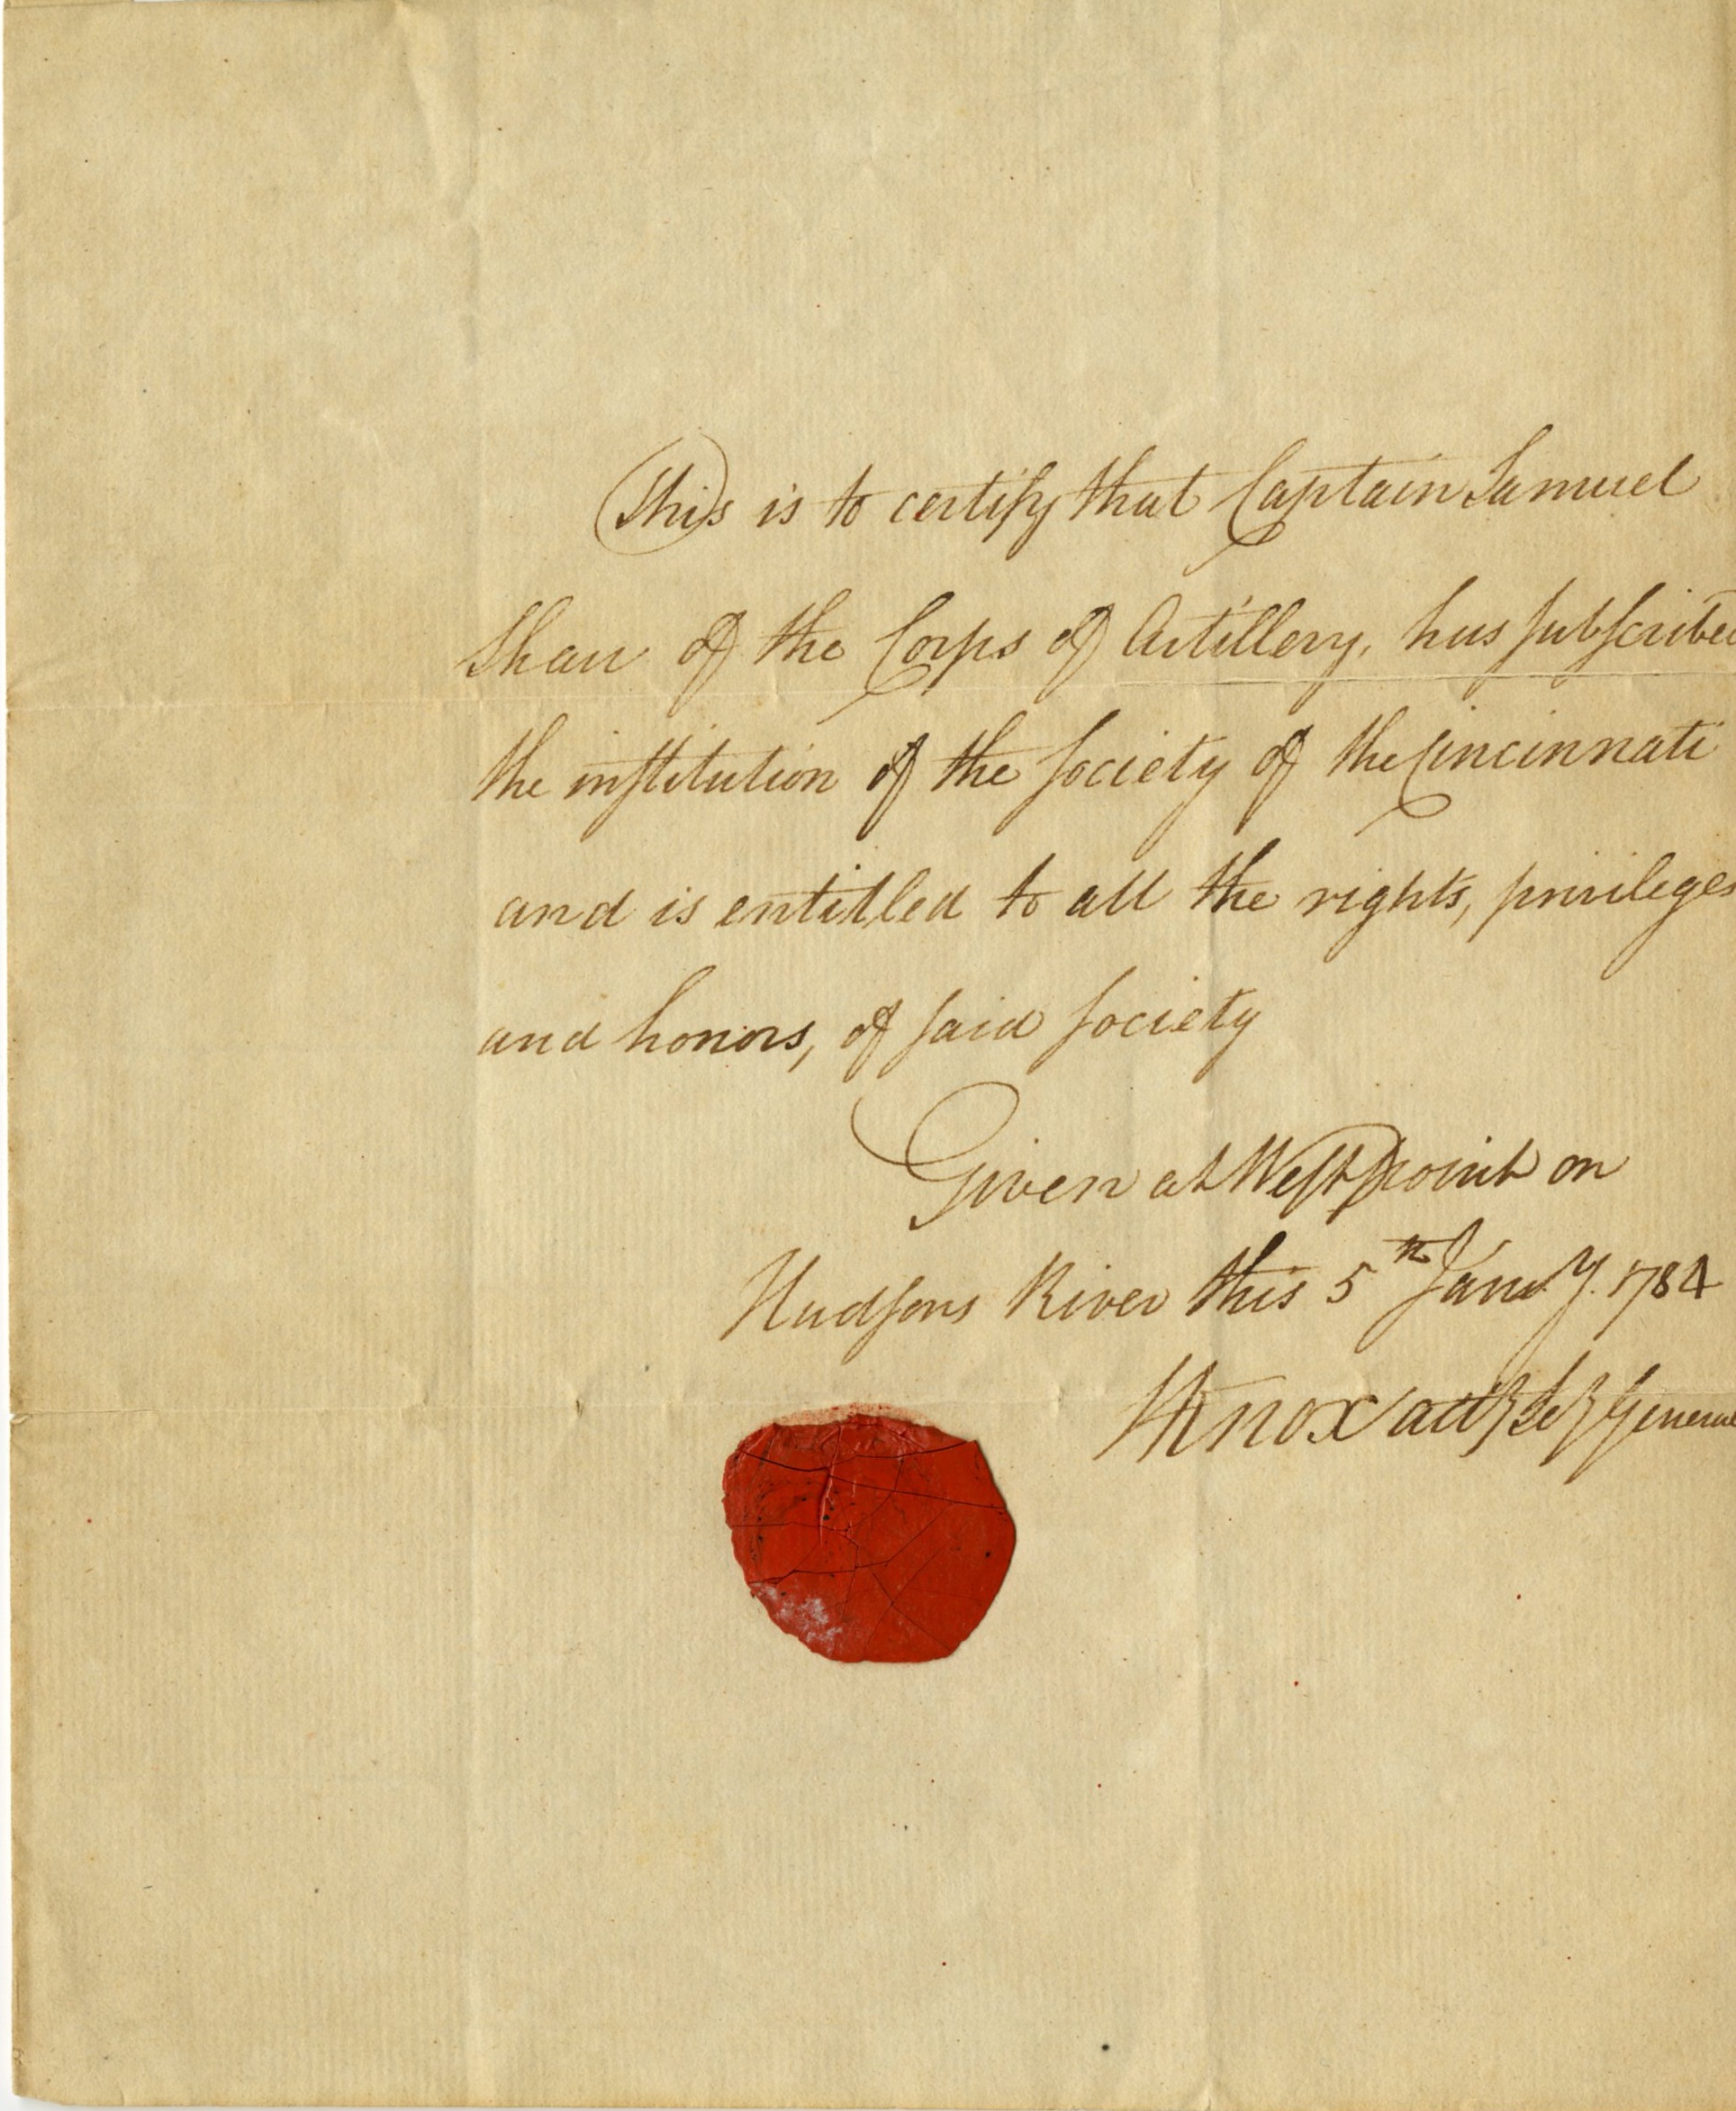 Samuel Shaw's Society of the Cincinnati membership certificate